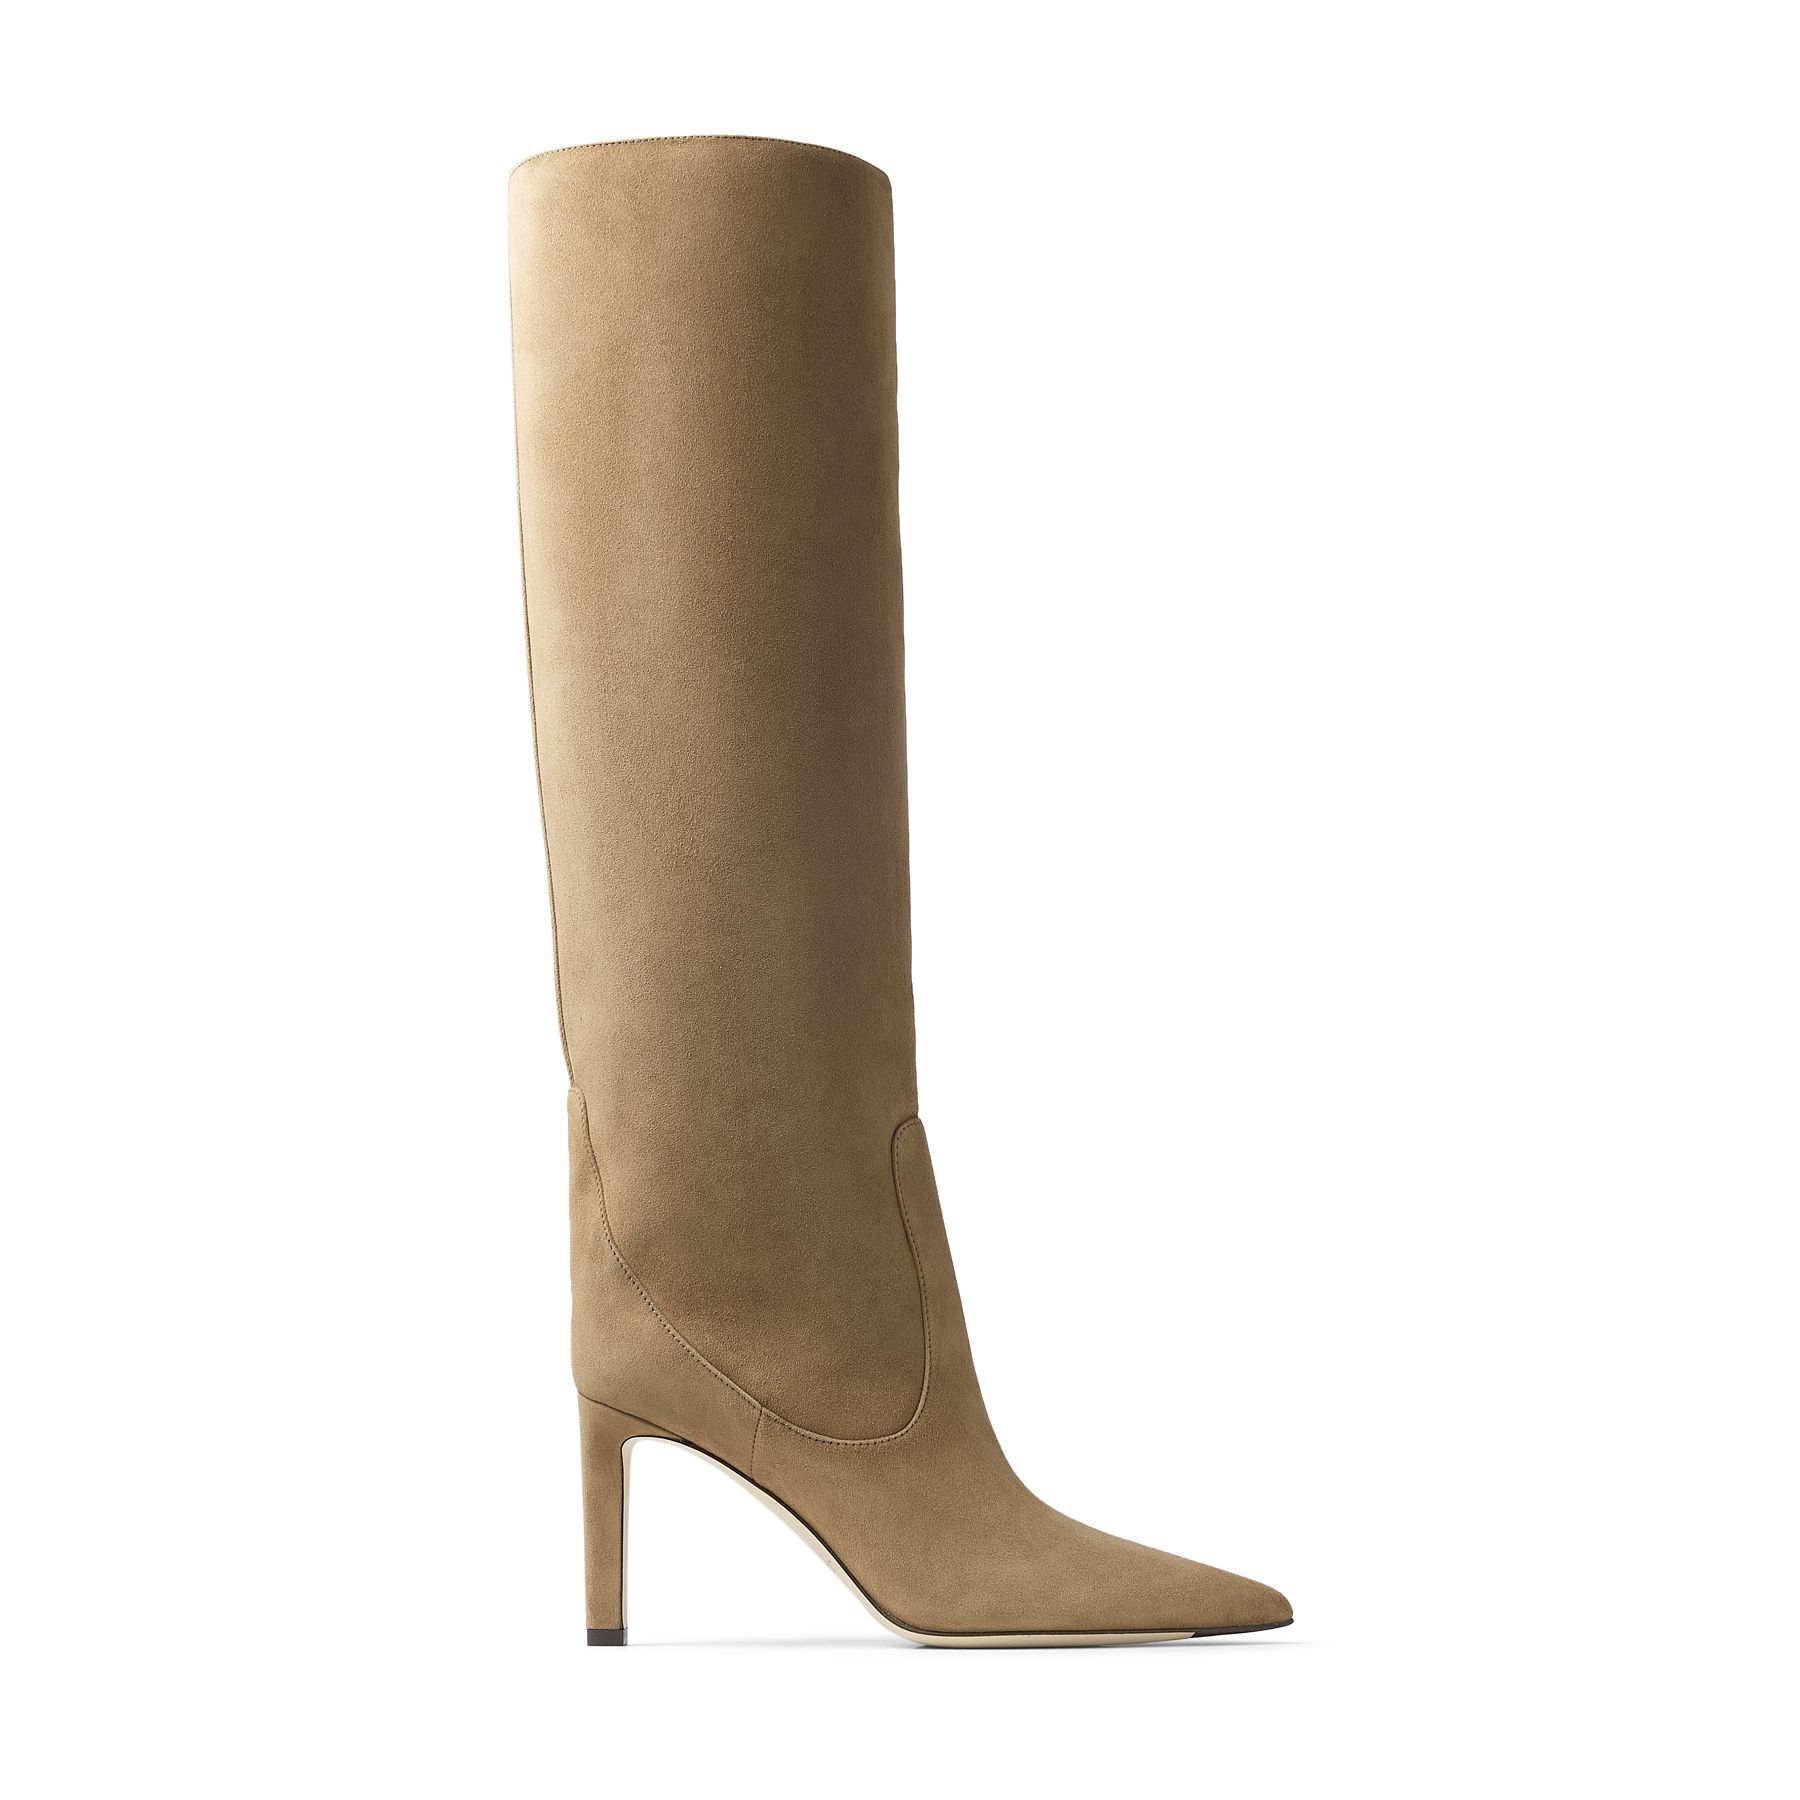 Clove Suede Pointed Toe Knee Boots | MAVIS 85| Autumn-Winter 2020 